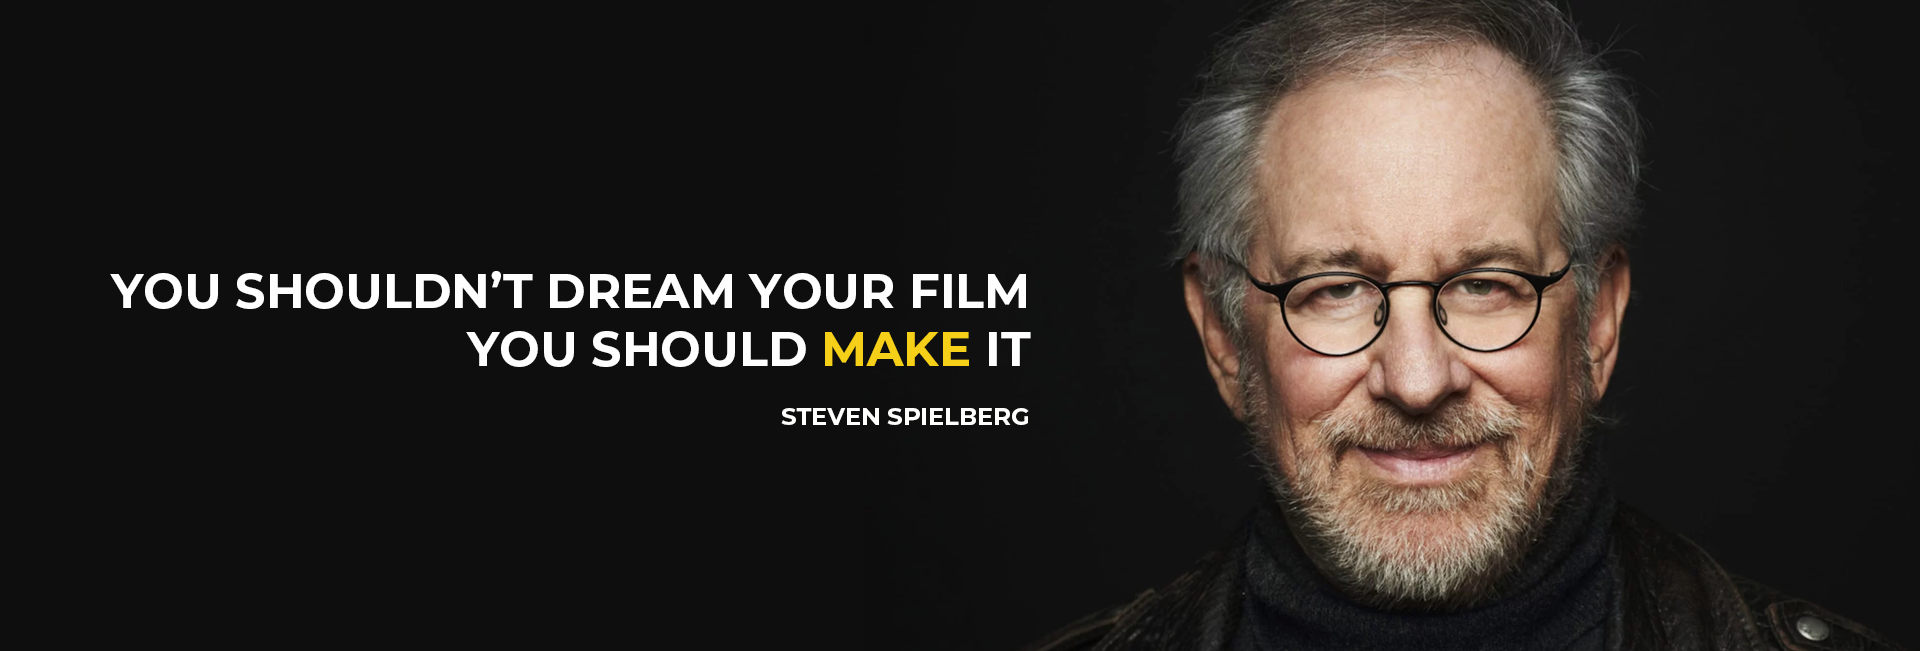 You shouldn't dream your film, you should make it - Steven Spielberg